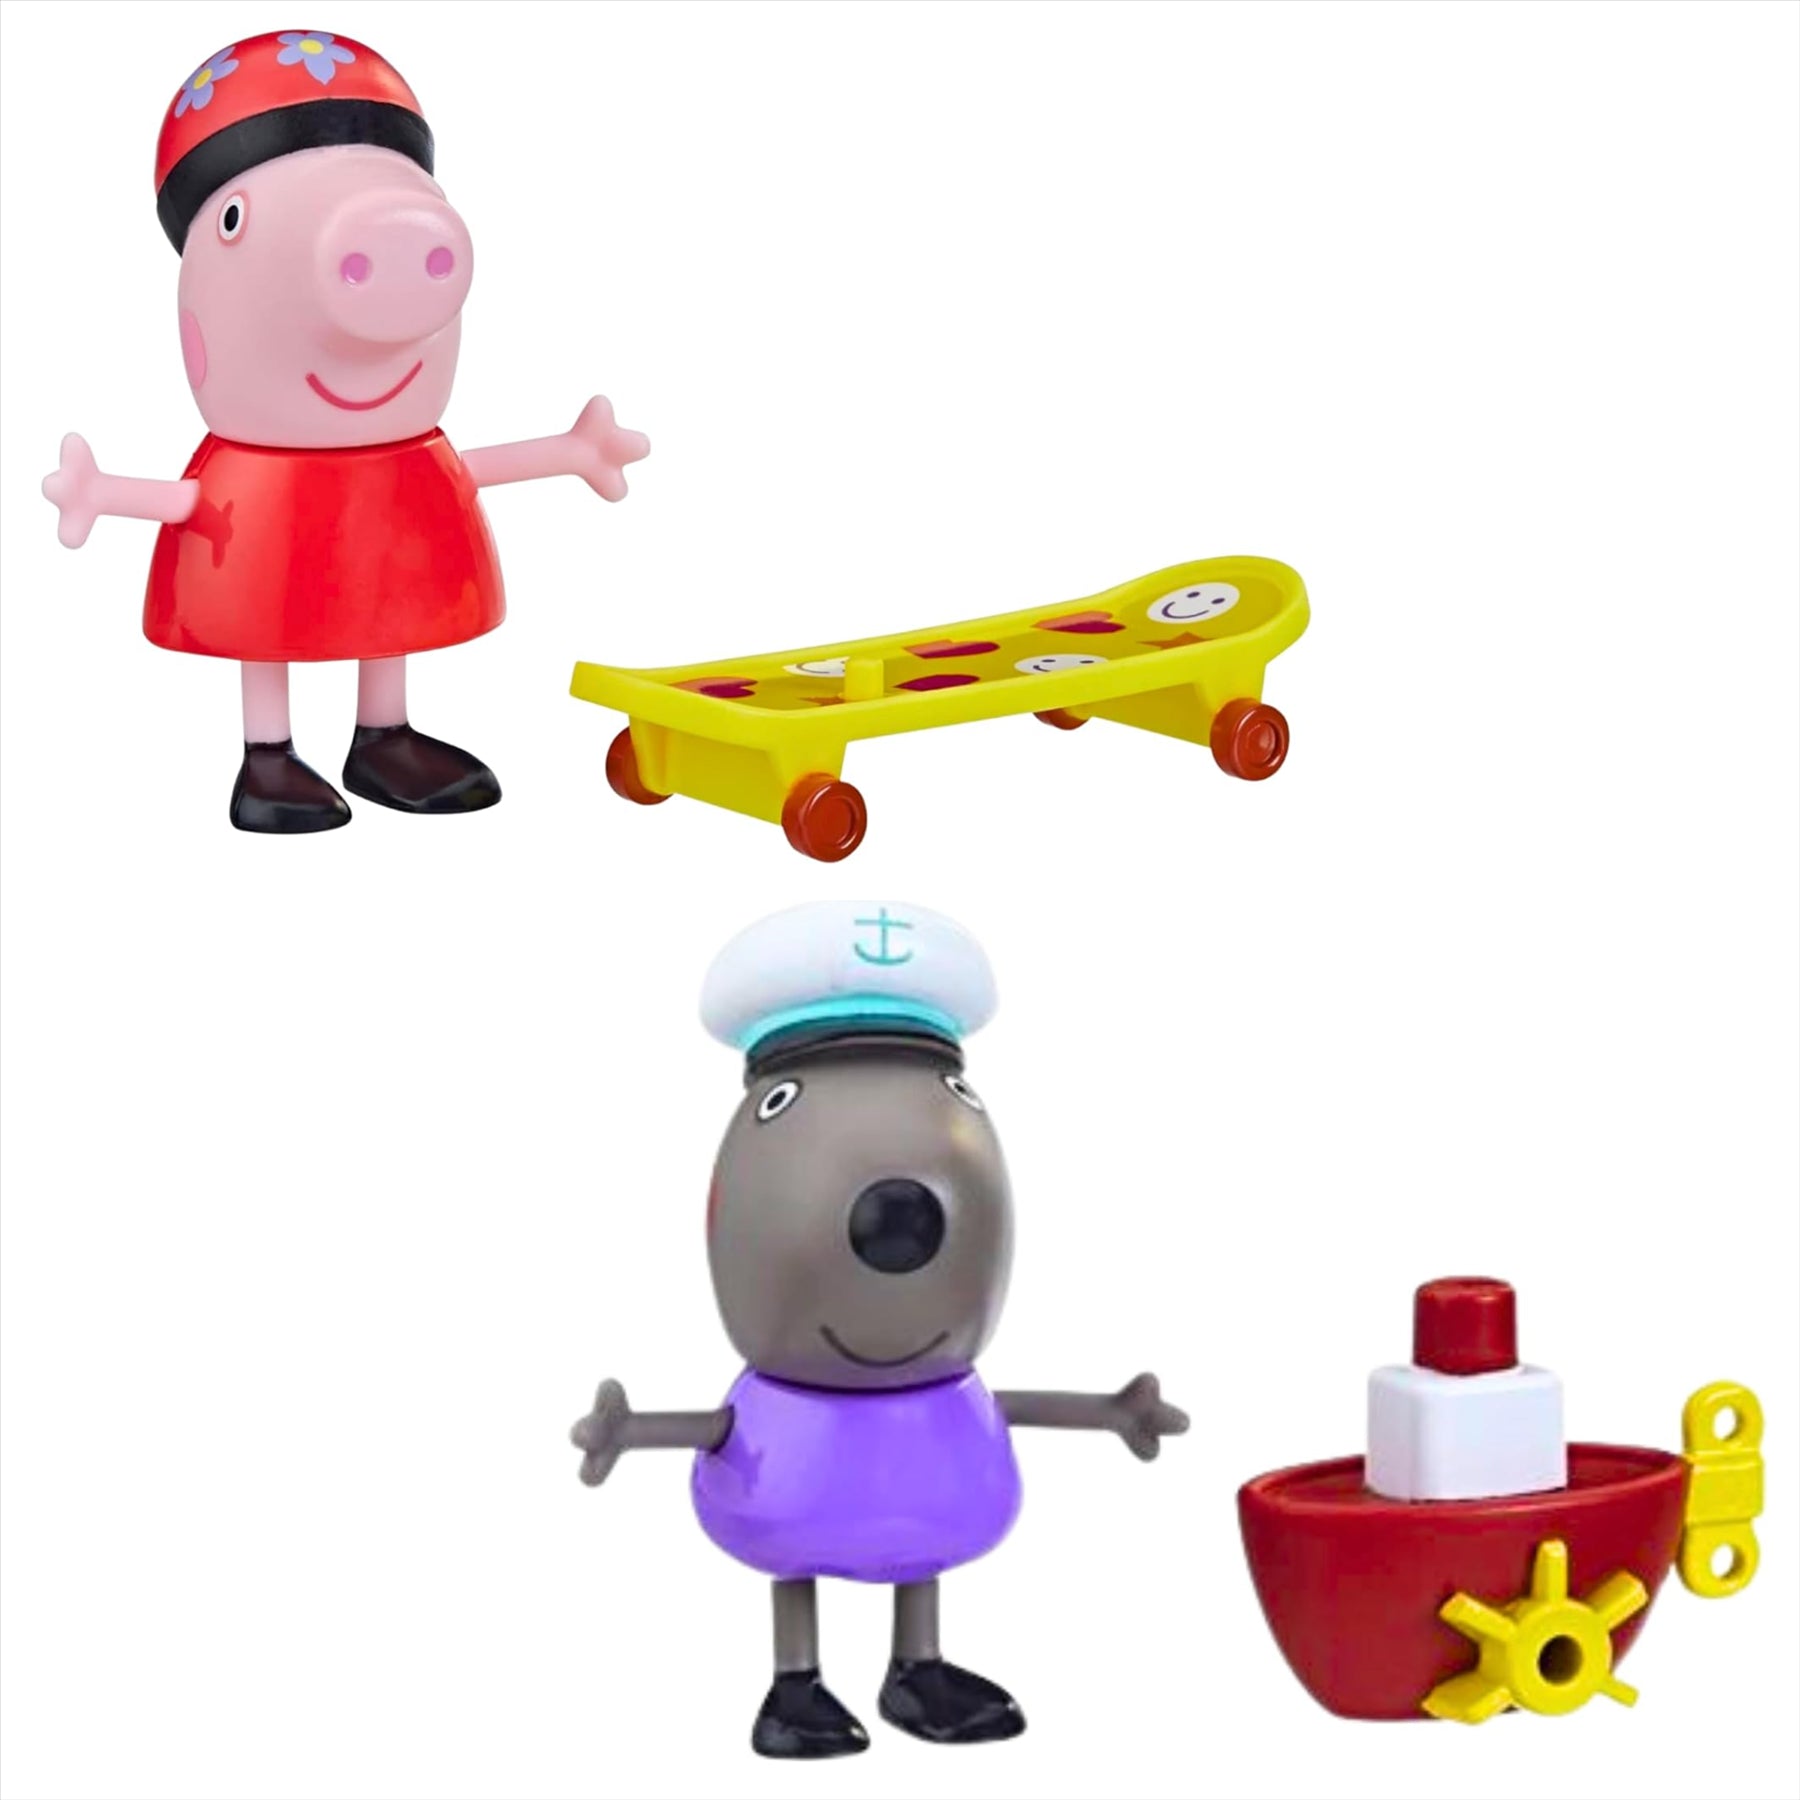 Peppa Pig - 3" 8cm Articulated Figure & Accessory - Peppa Pig with Skateboard & Danny Dog 2 Pack - Toptoys2u